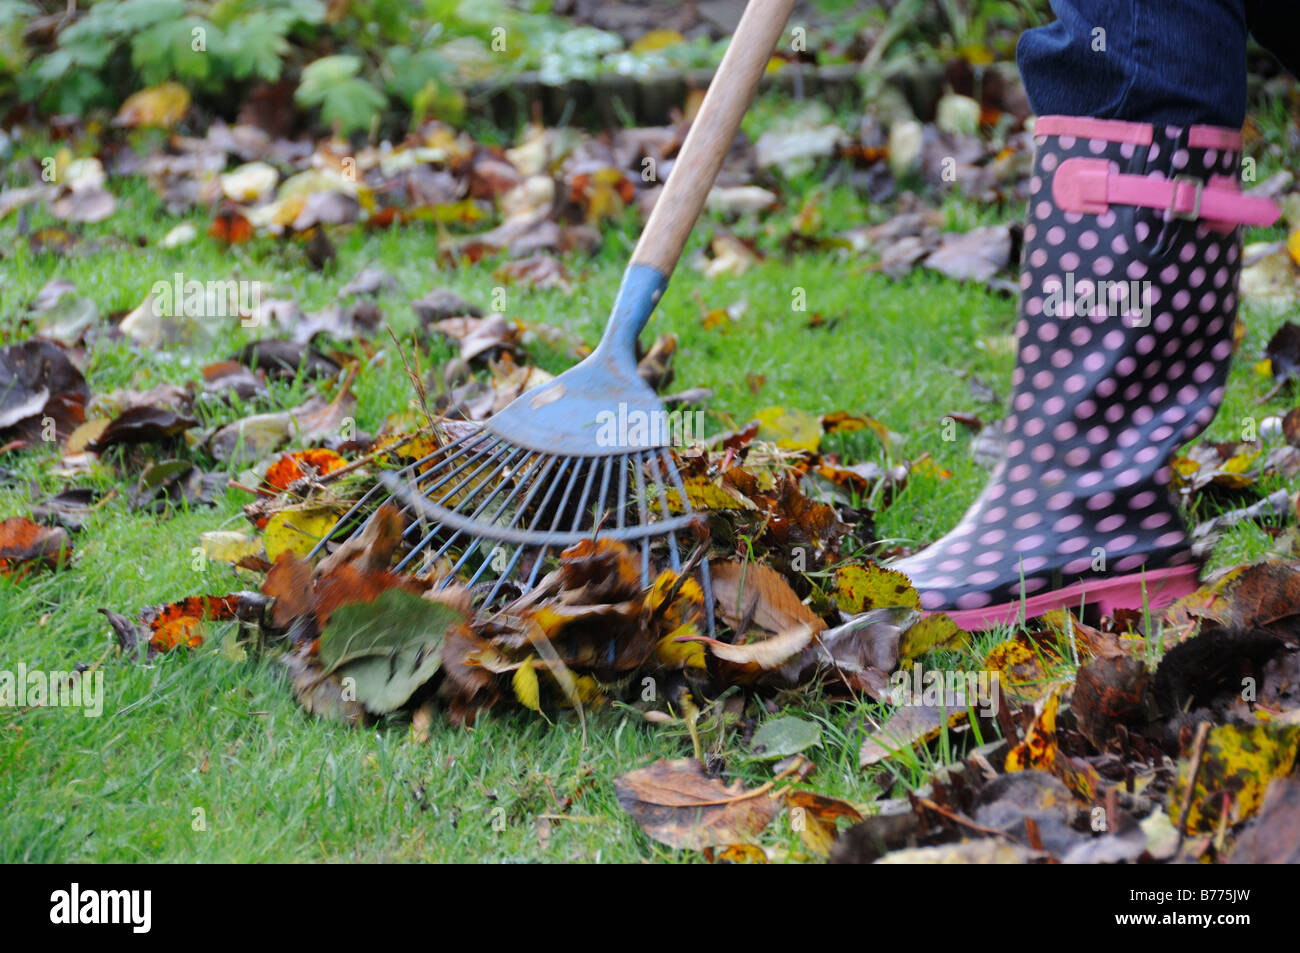 Woman with wellies raking fallen leaves with lawn rake UK November Stock Photo